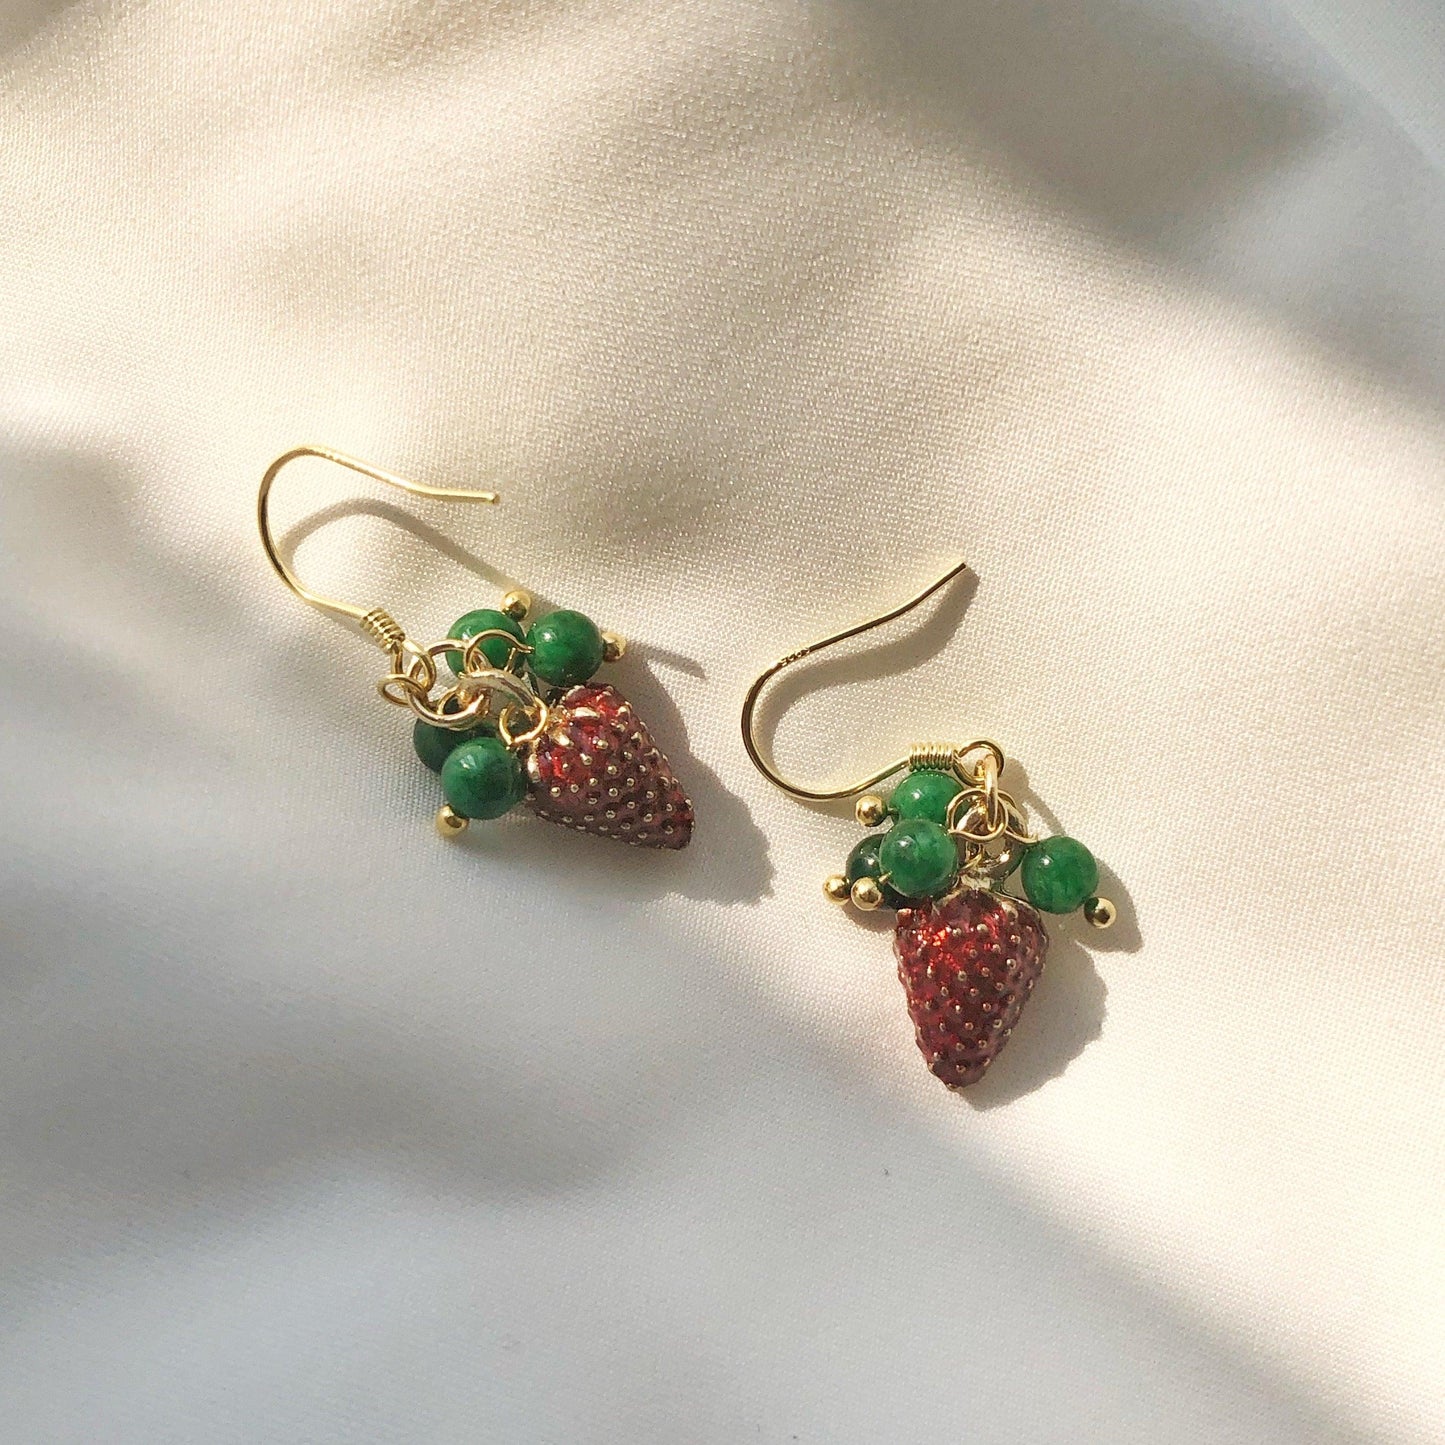 Strawberry Earrings 002 - Abbott Atelier